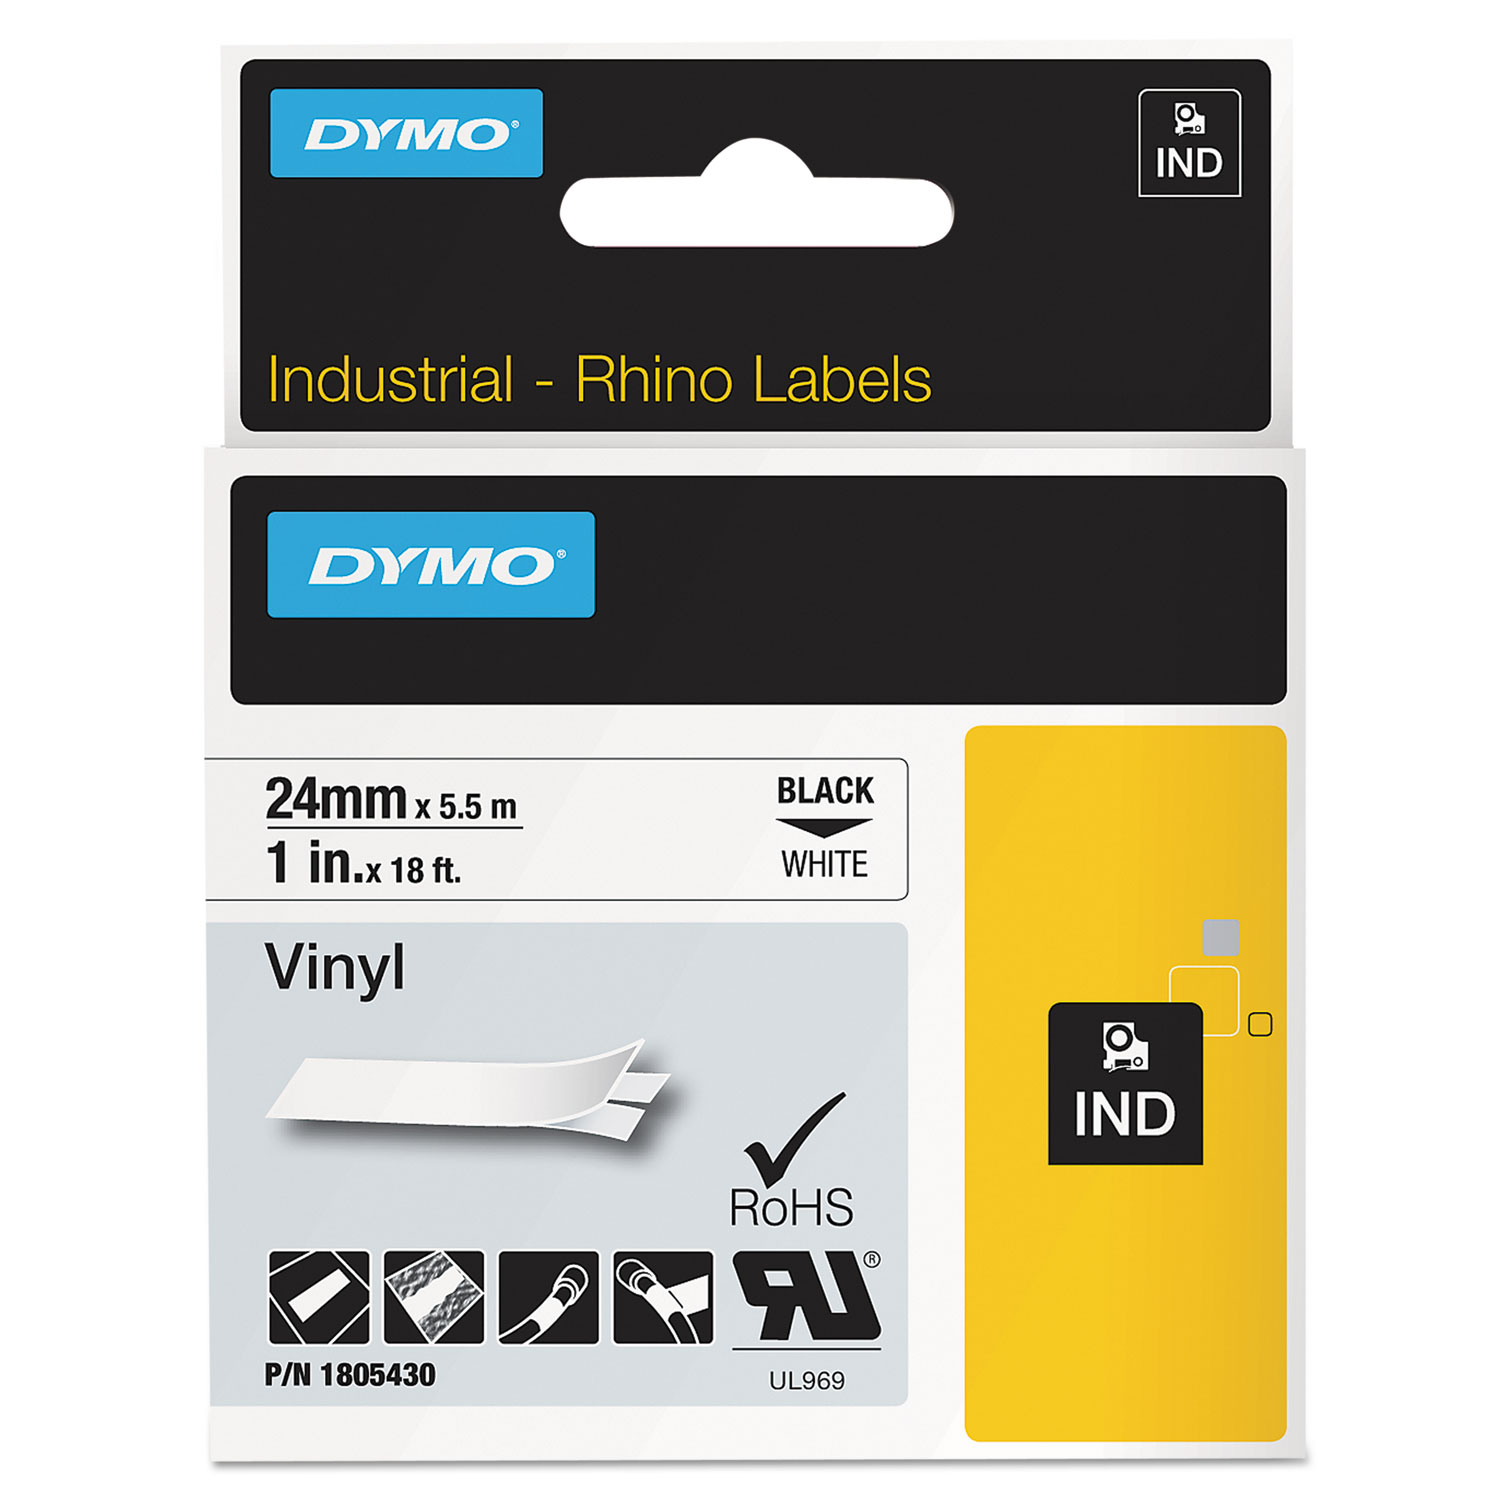  DYMO 1805430 Rhino Permanent Vinyl Industrial Label Tape, 1 x 18 ft, White/Black Print (DYM1805430) 